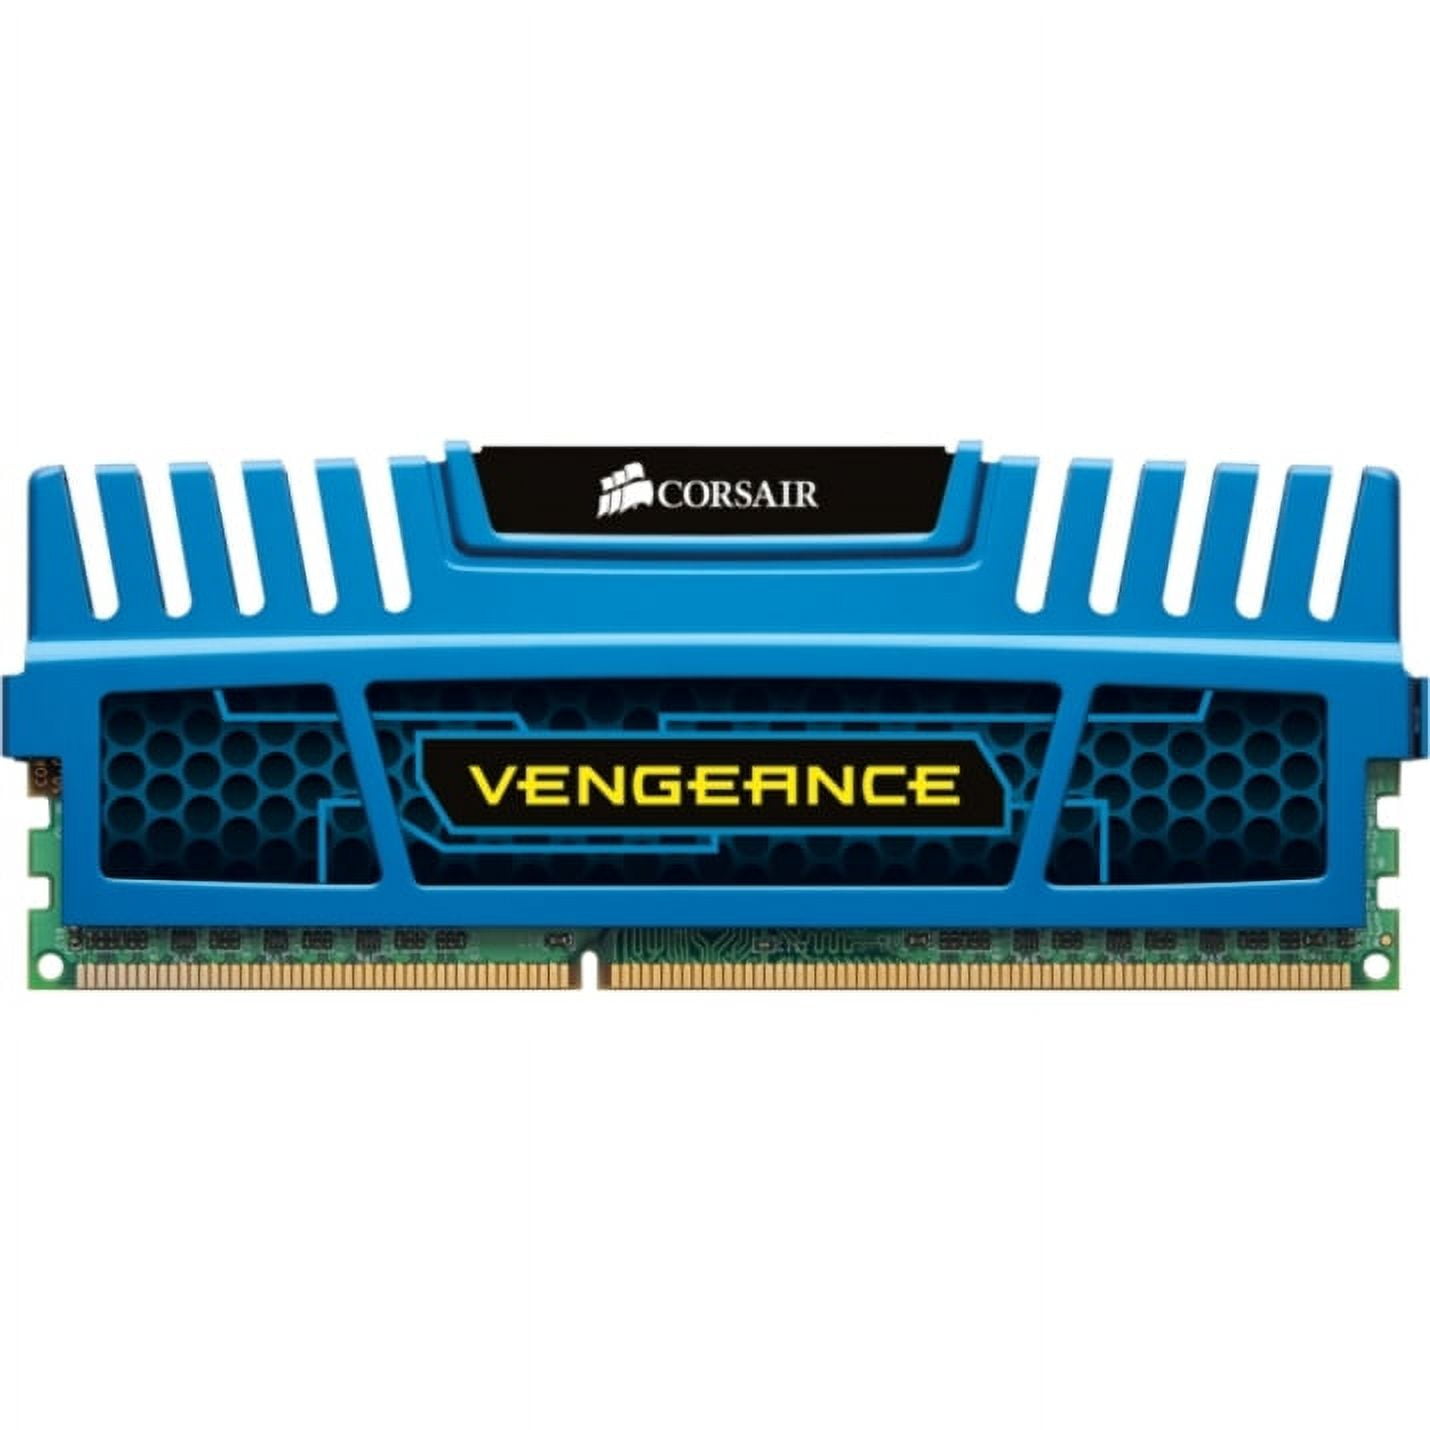 Corsair Vengeance 8GB DDR3 RAM 1600MHz Desktop Memory at Rs 3349